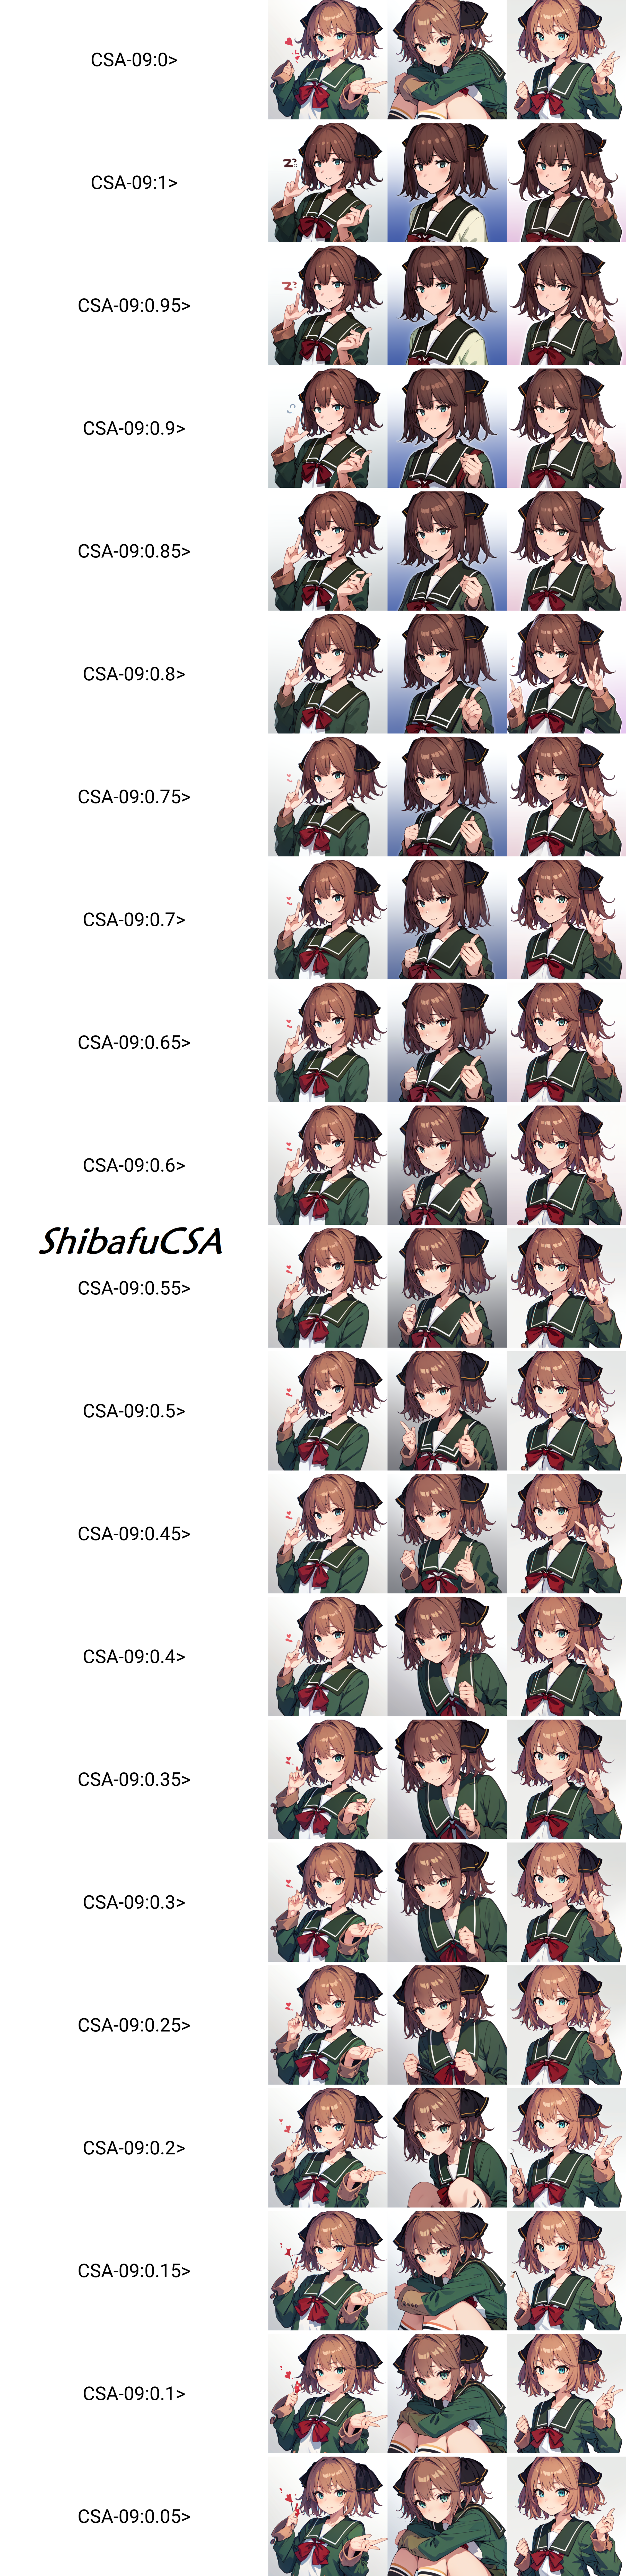 Chanson Style Adder (CSA) & Chanson Detail Enhancer (CDE) image by Chanson527